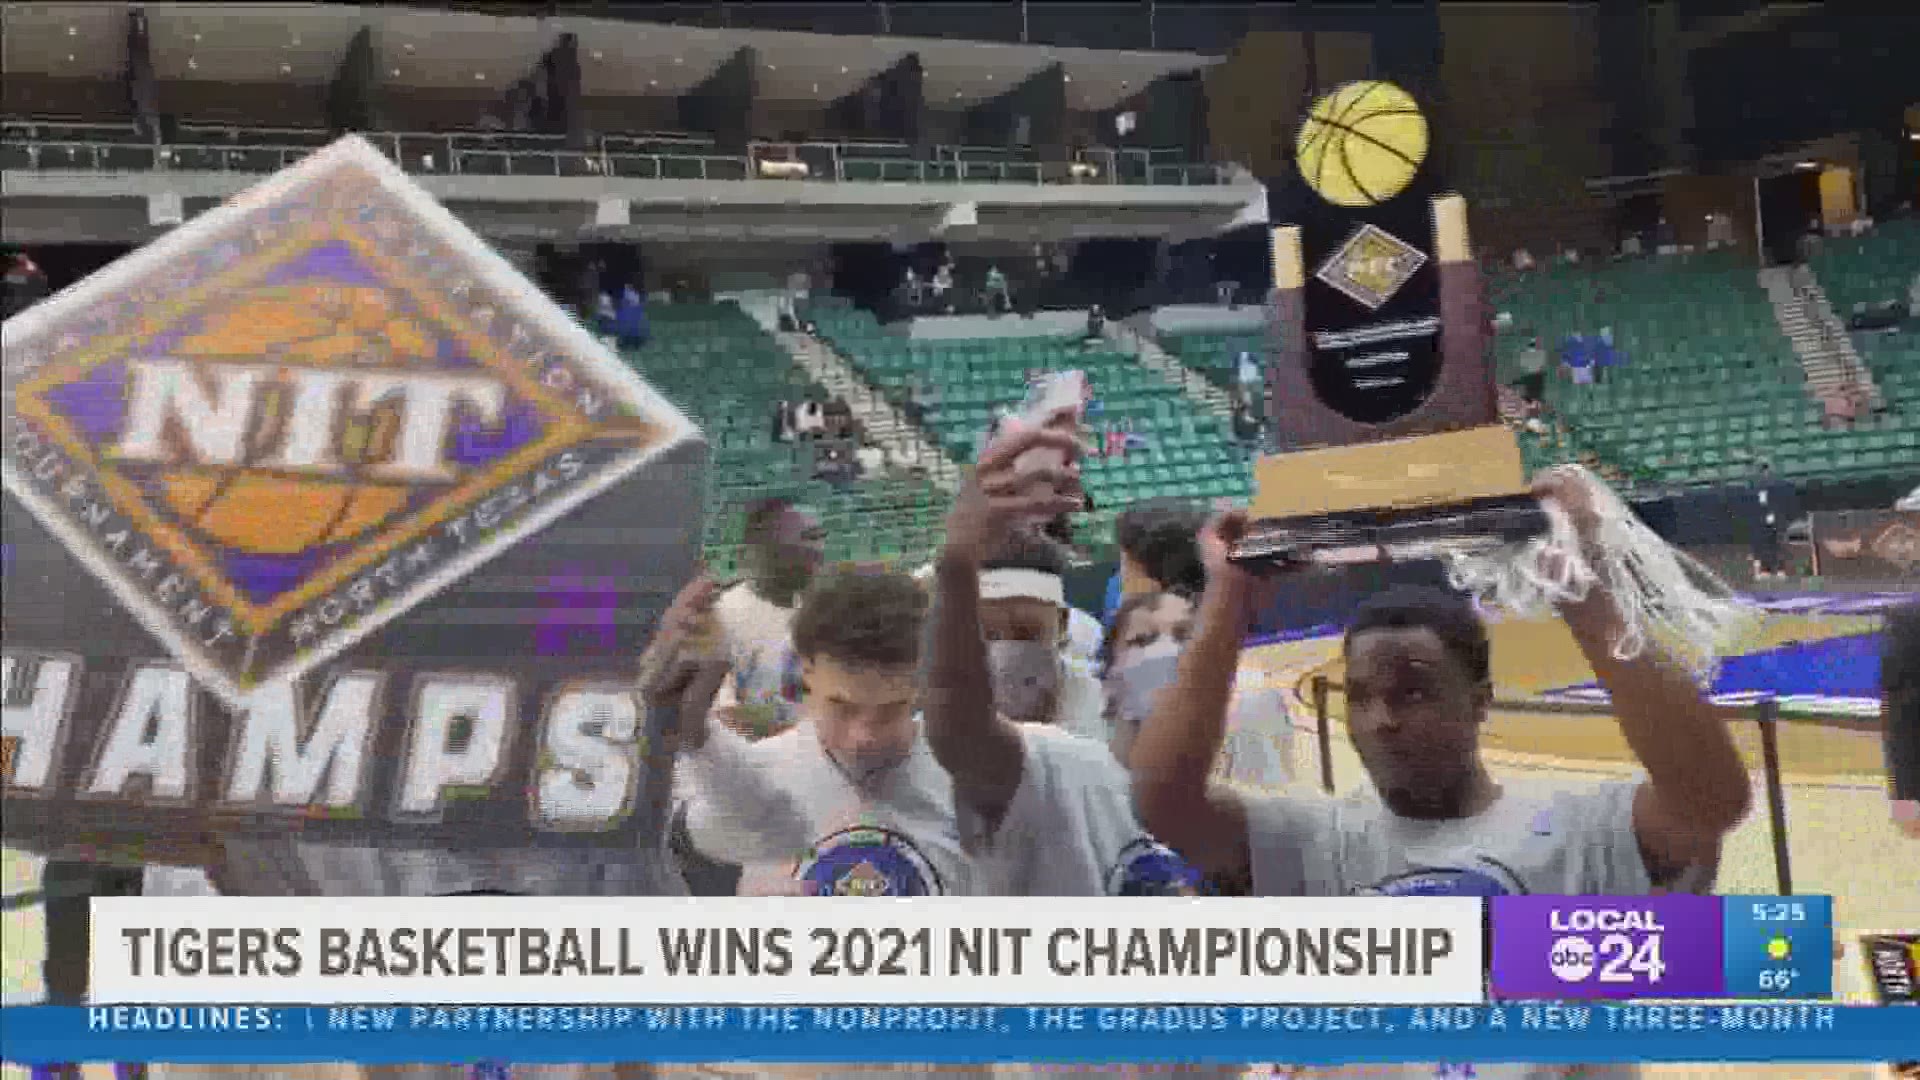 University of Memphis men’s basketball team wins NIT championship